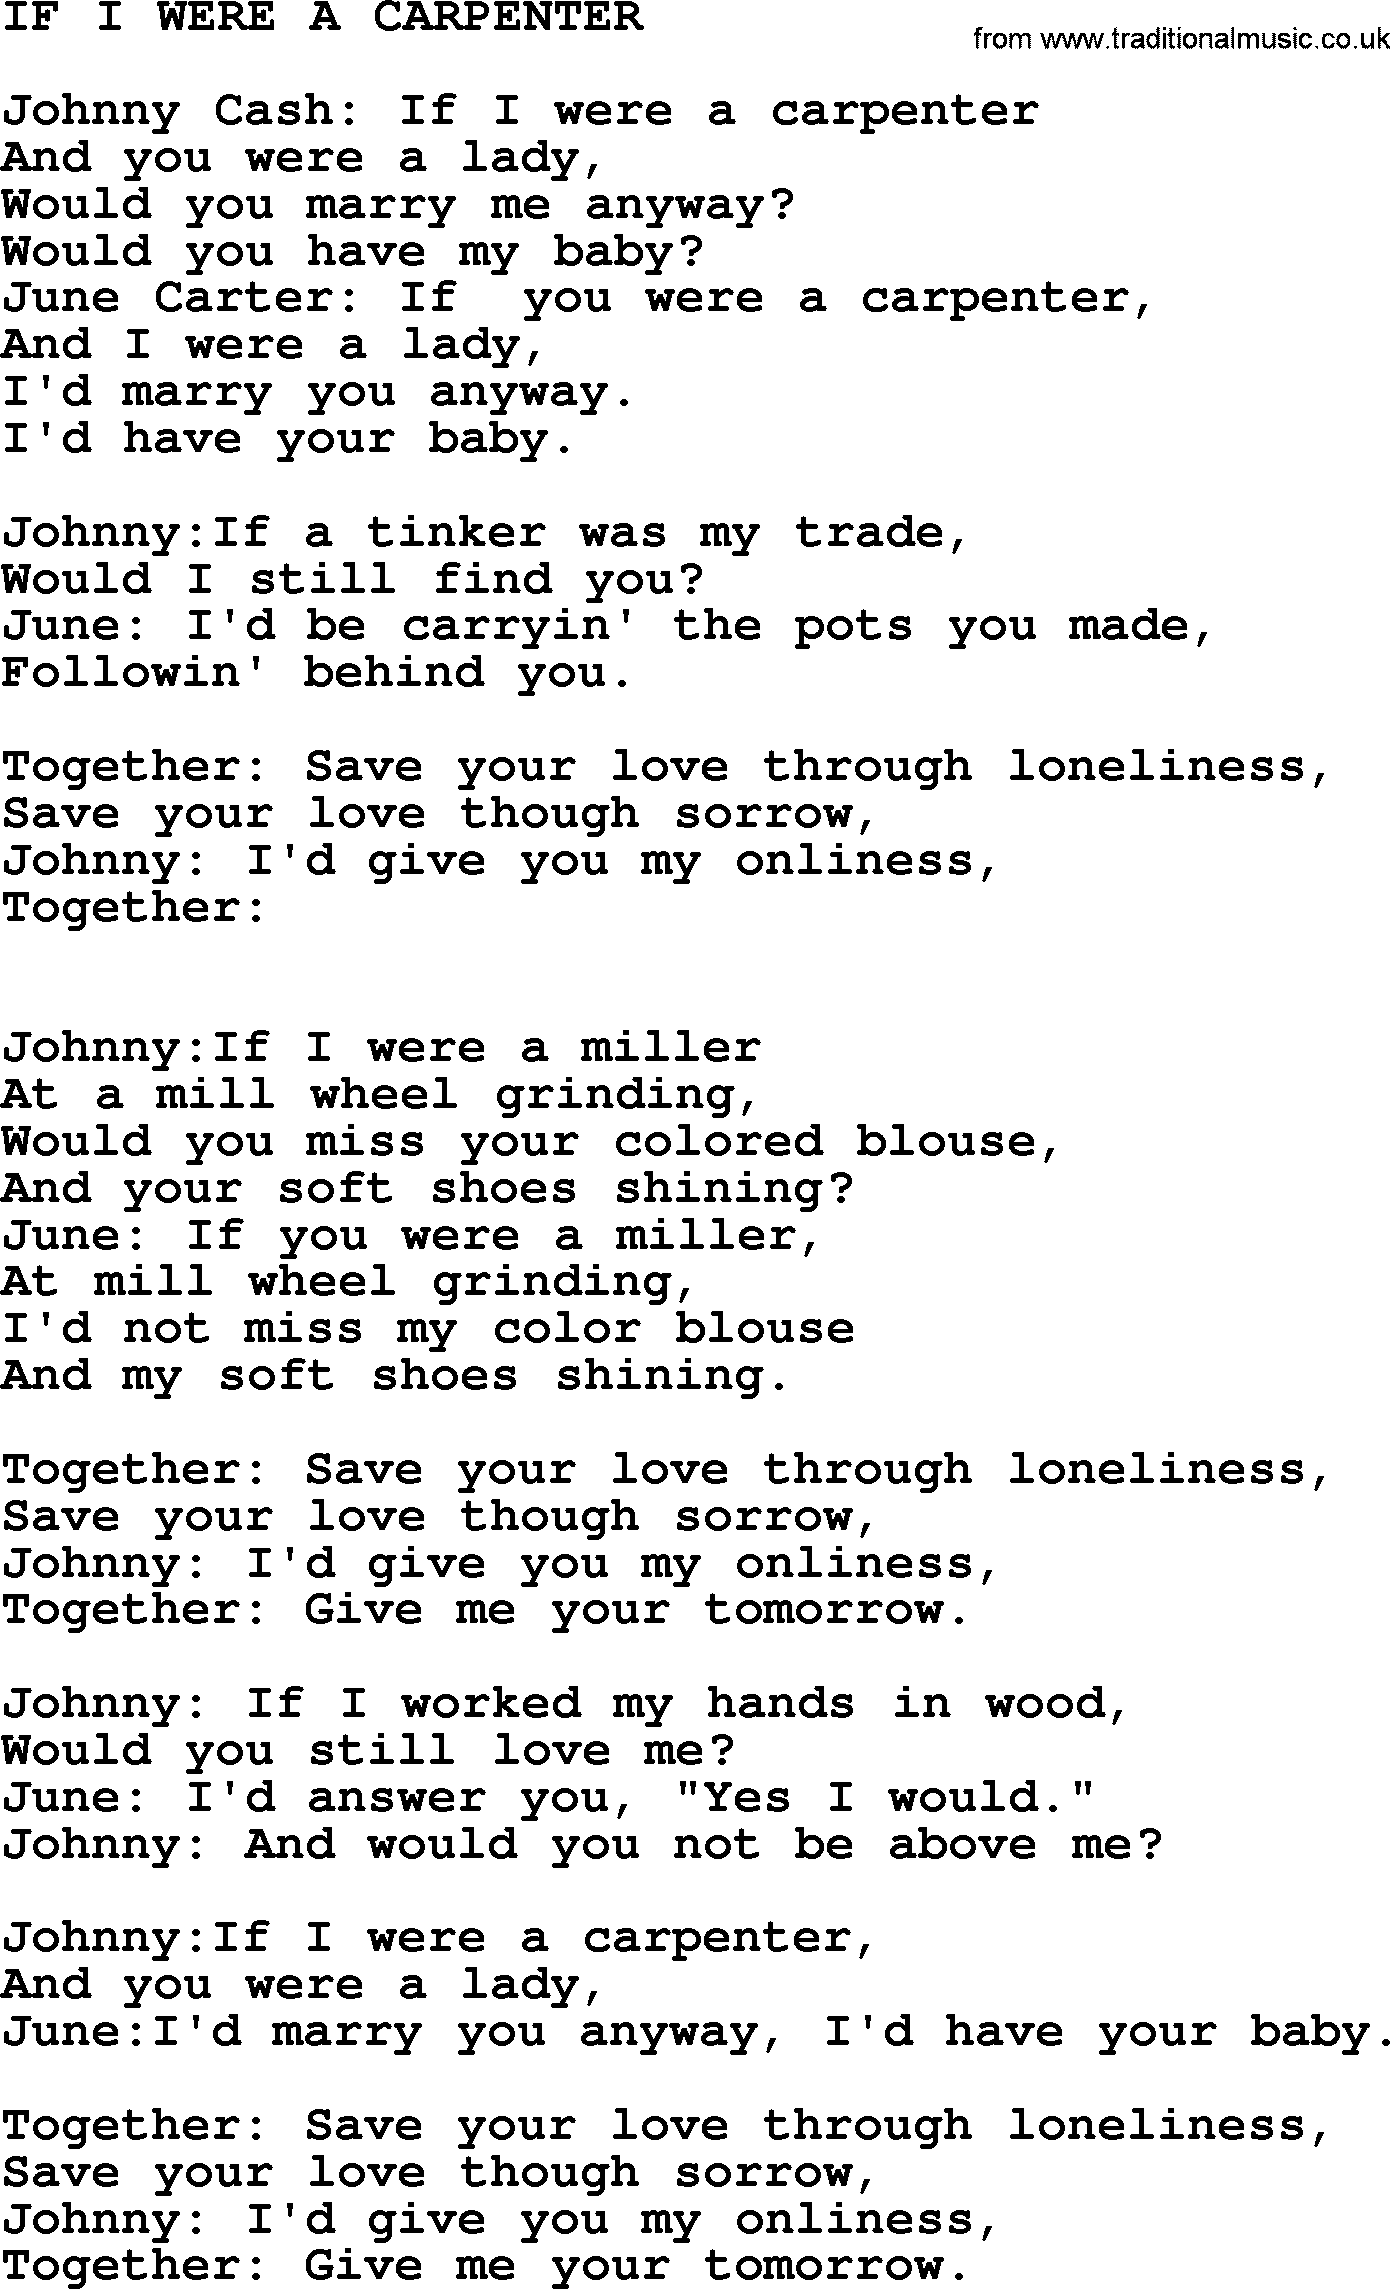 Johnny Cash song If I Were A Carpenter.txt lyrics